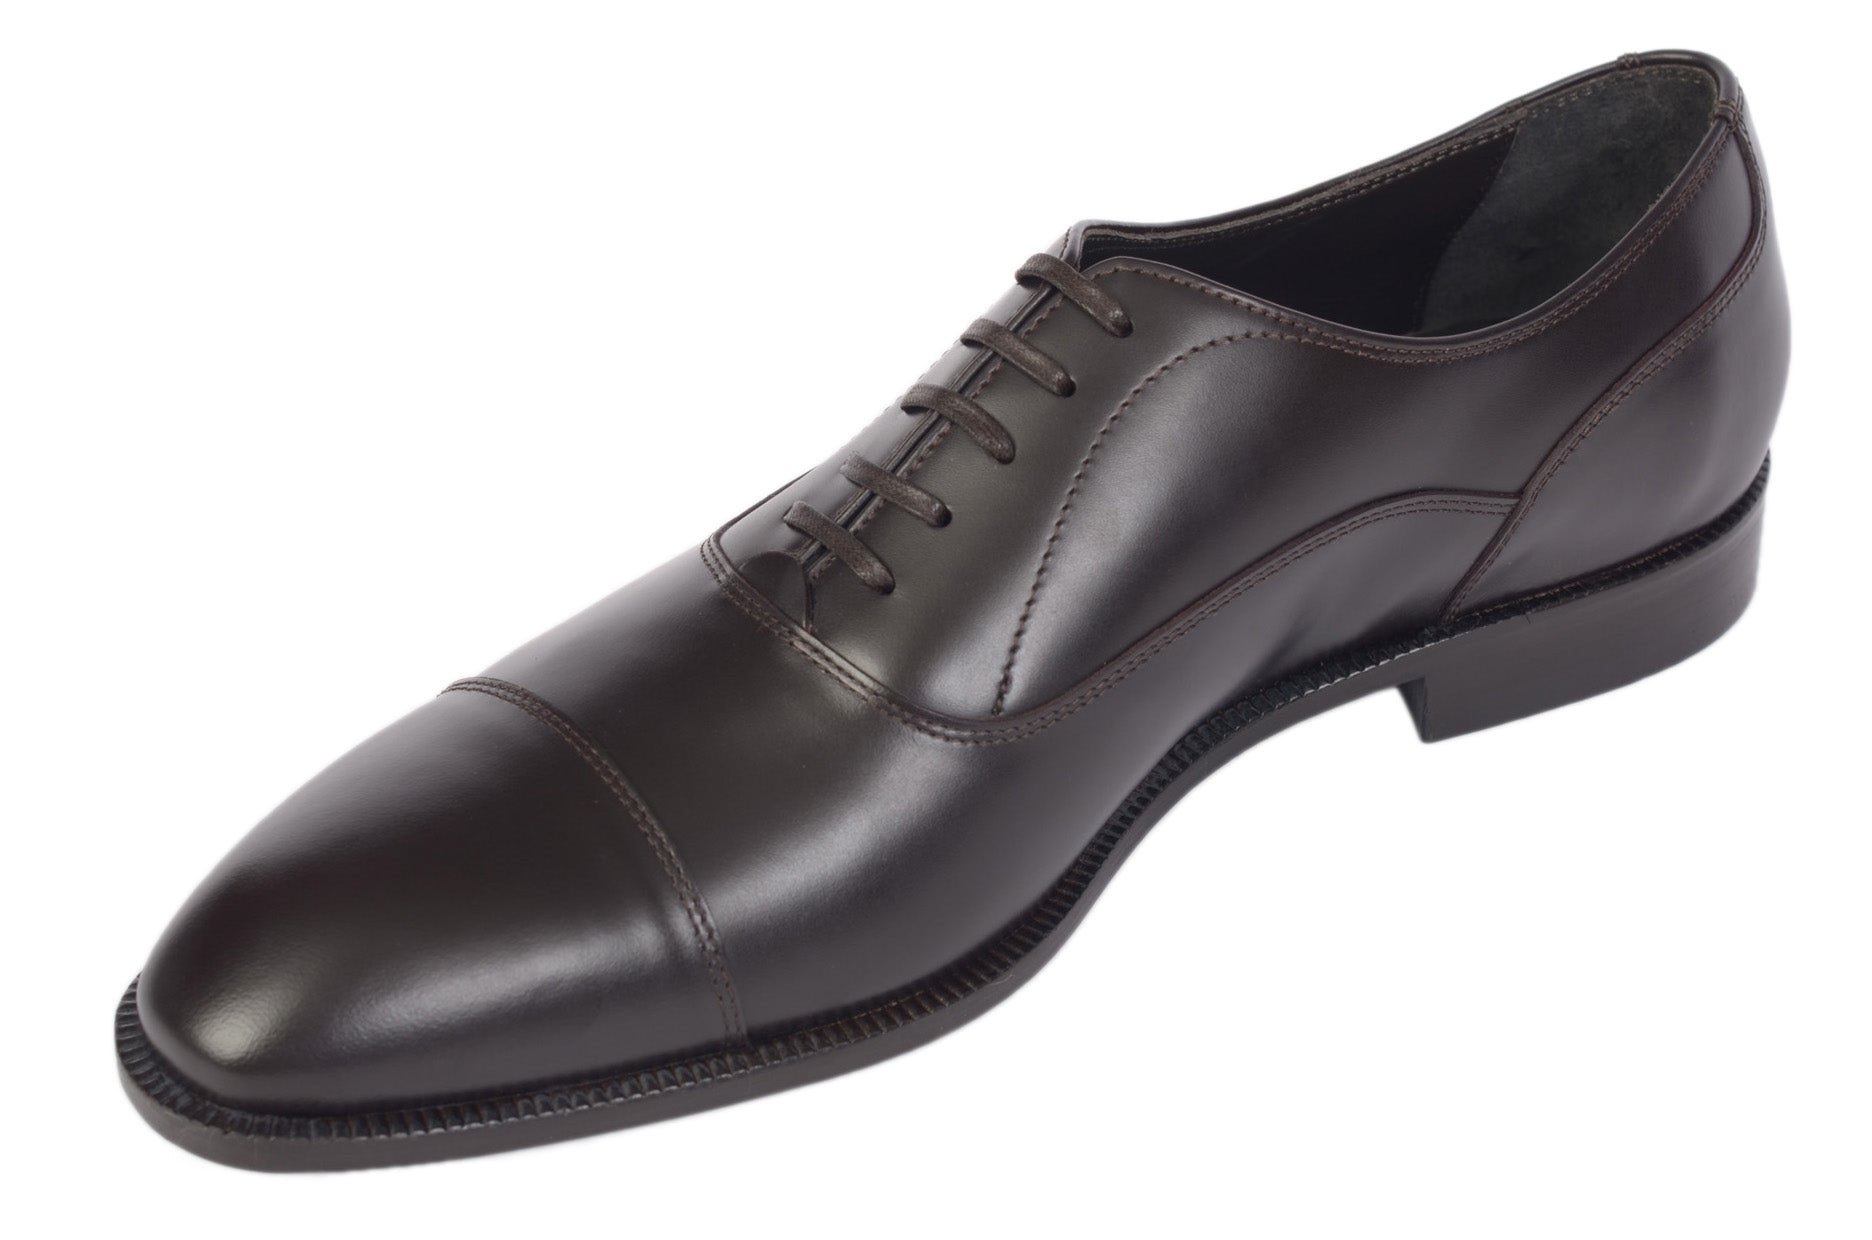 CANALI 1934 Dark Brown Calf Leather Balmoral Oxford Dress Shoes EU 40 NEW US 7 CANALI